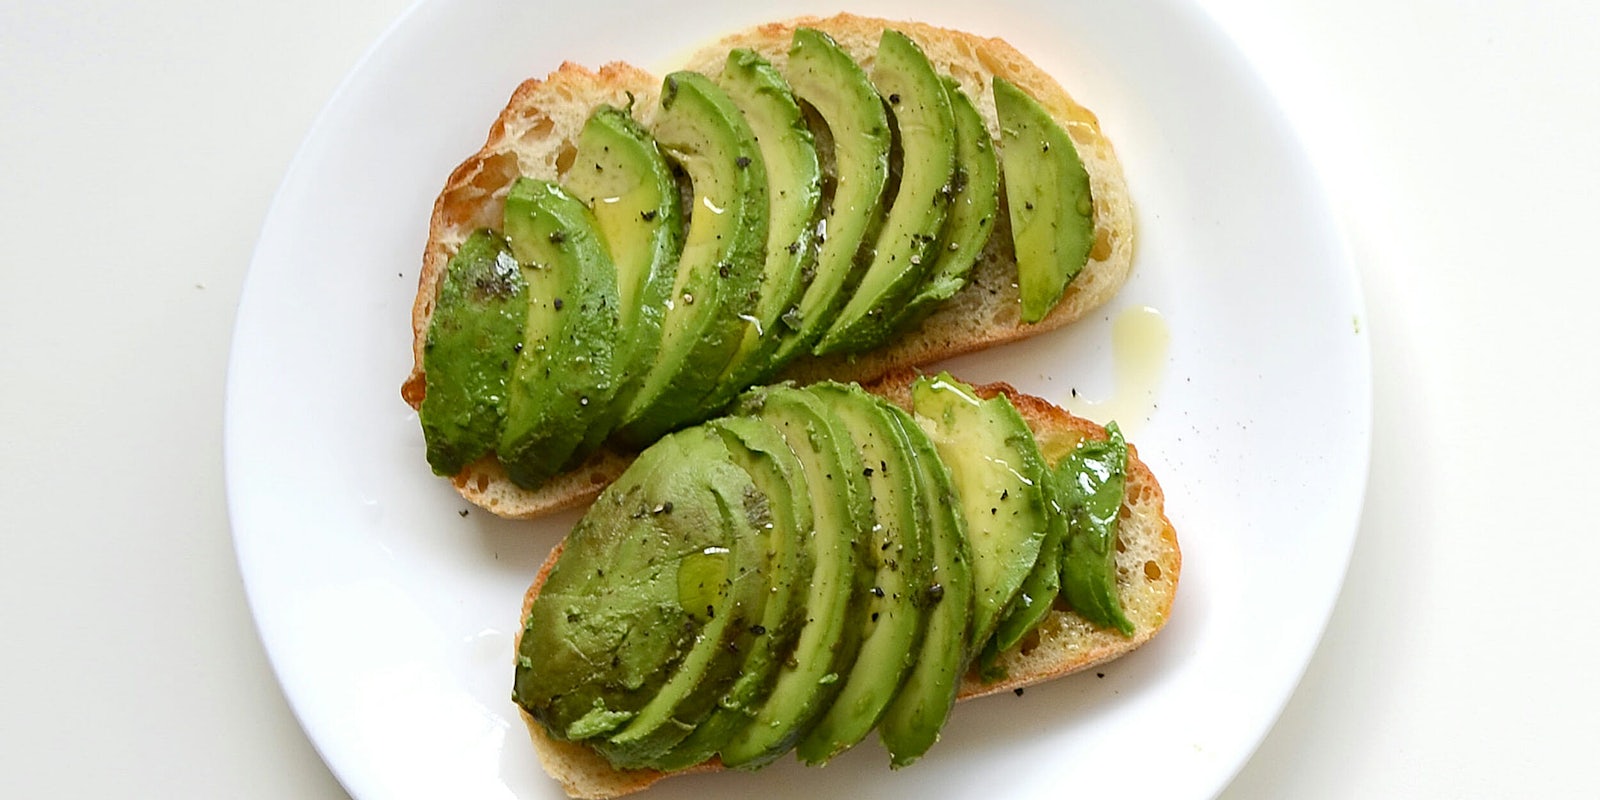 Sliced avocado on toasted bread